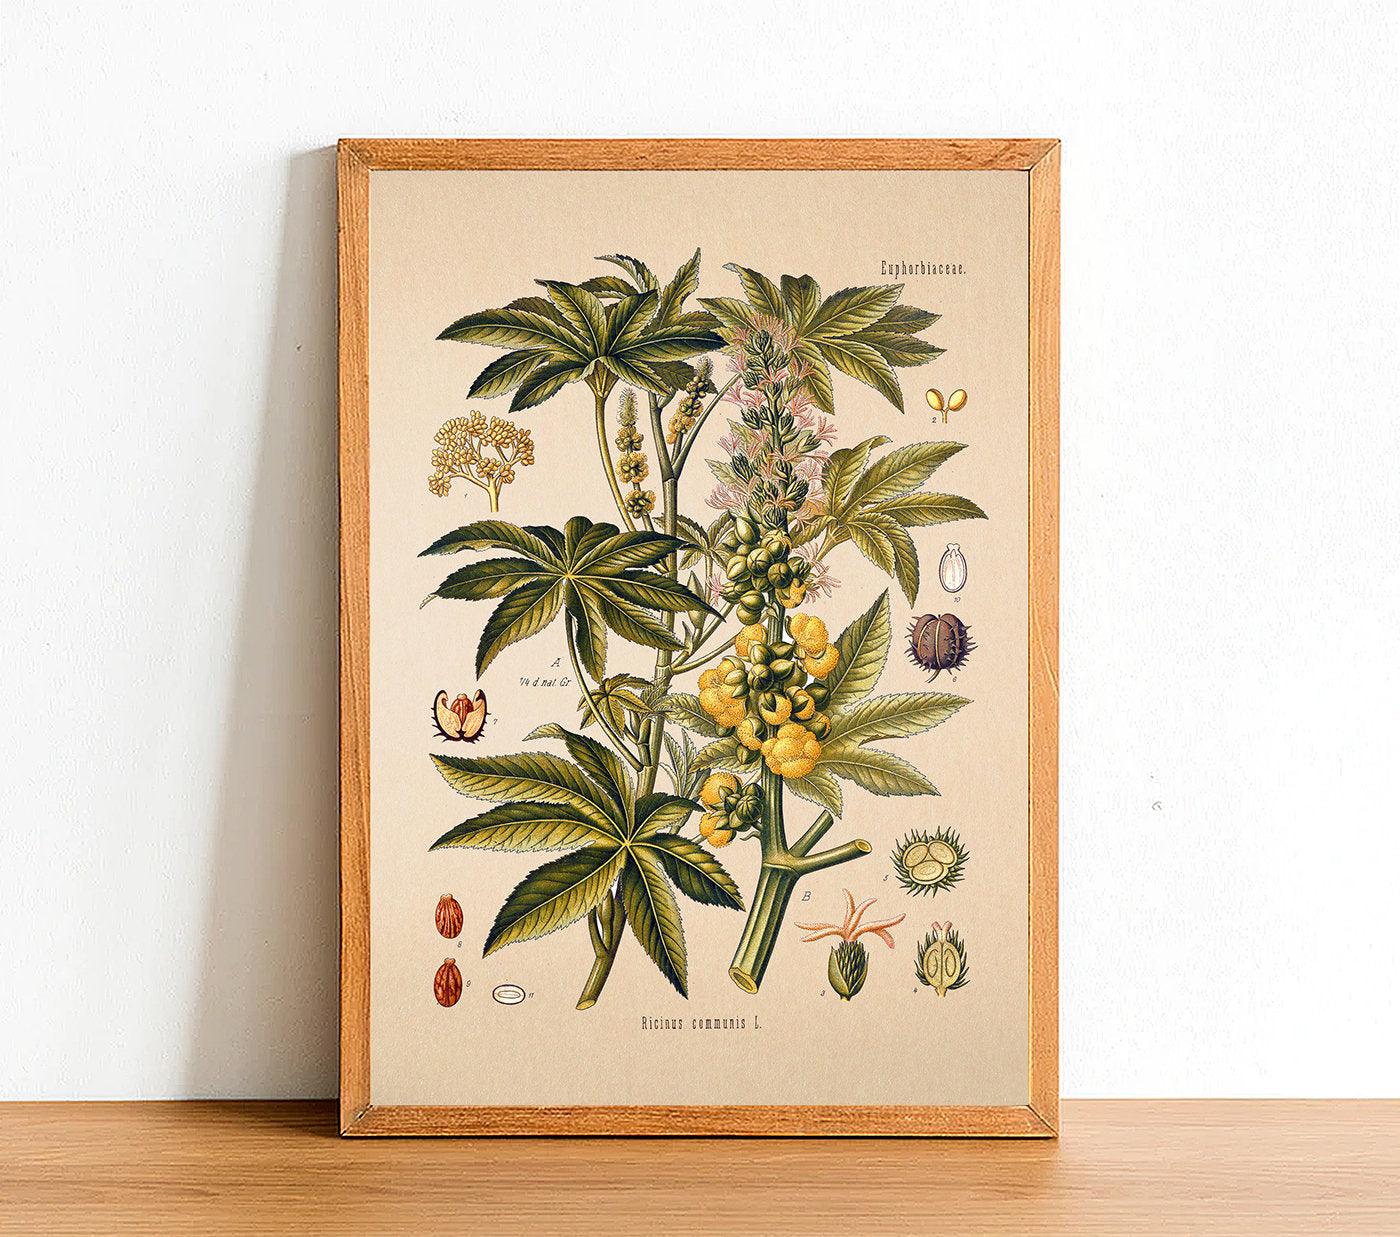 Castor Oil Tree Print - Antique Botanical Poster - Ricinus Communis - Classic Posters